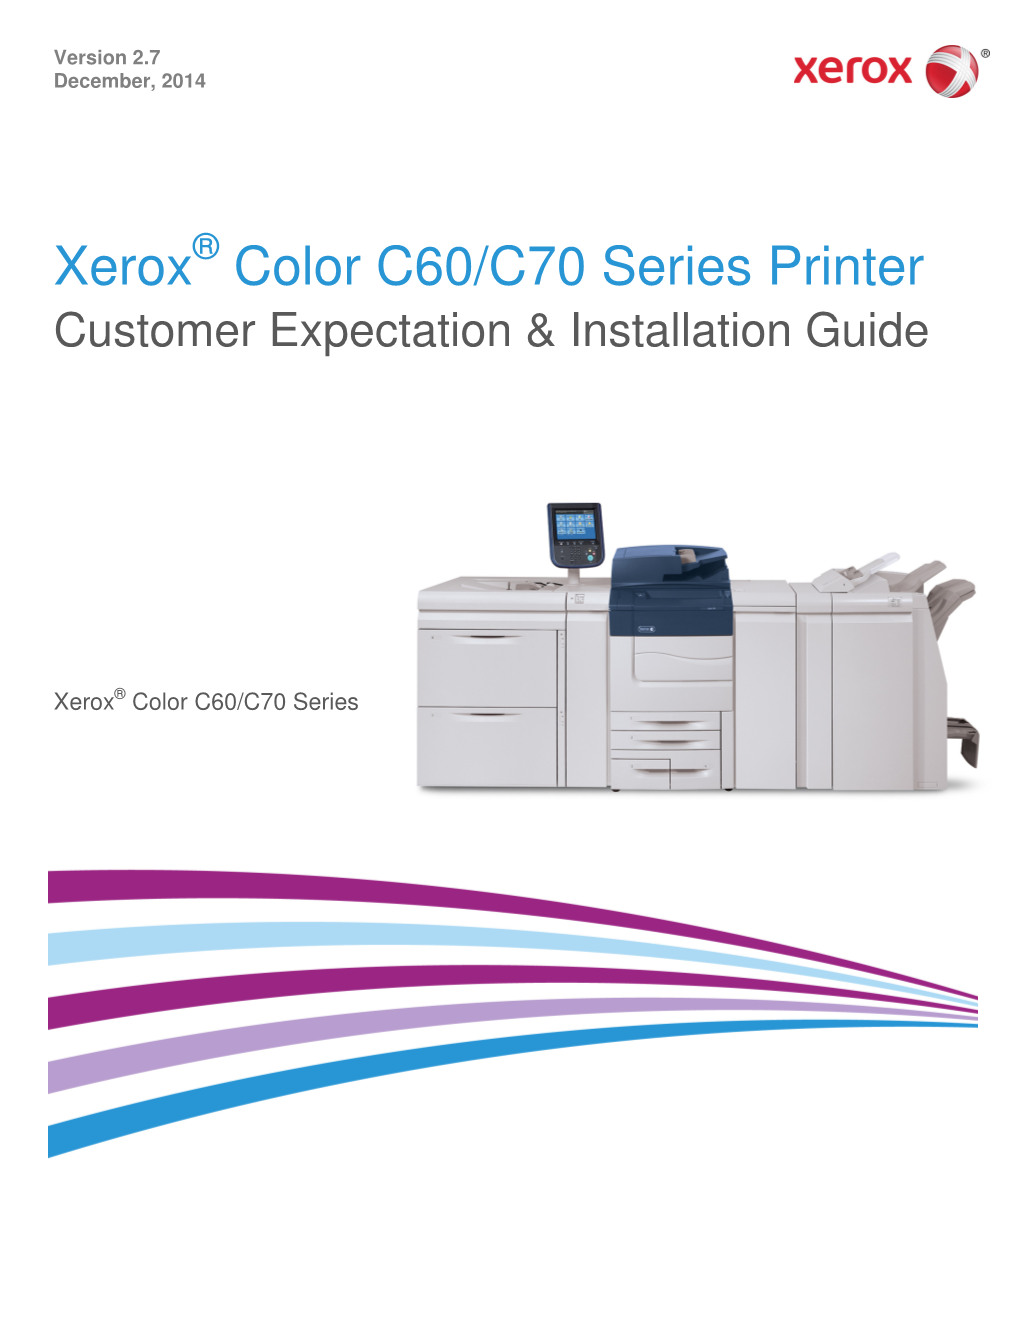 Xerox Color C60/C70 Series Printer